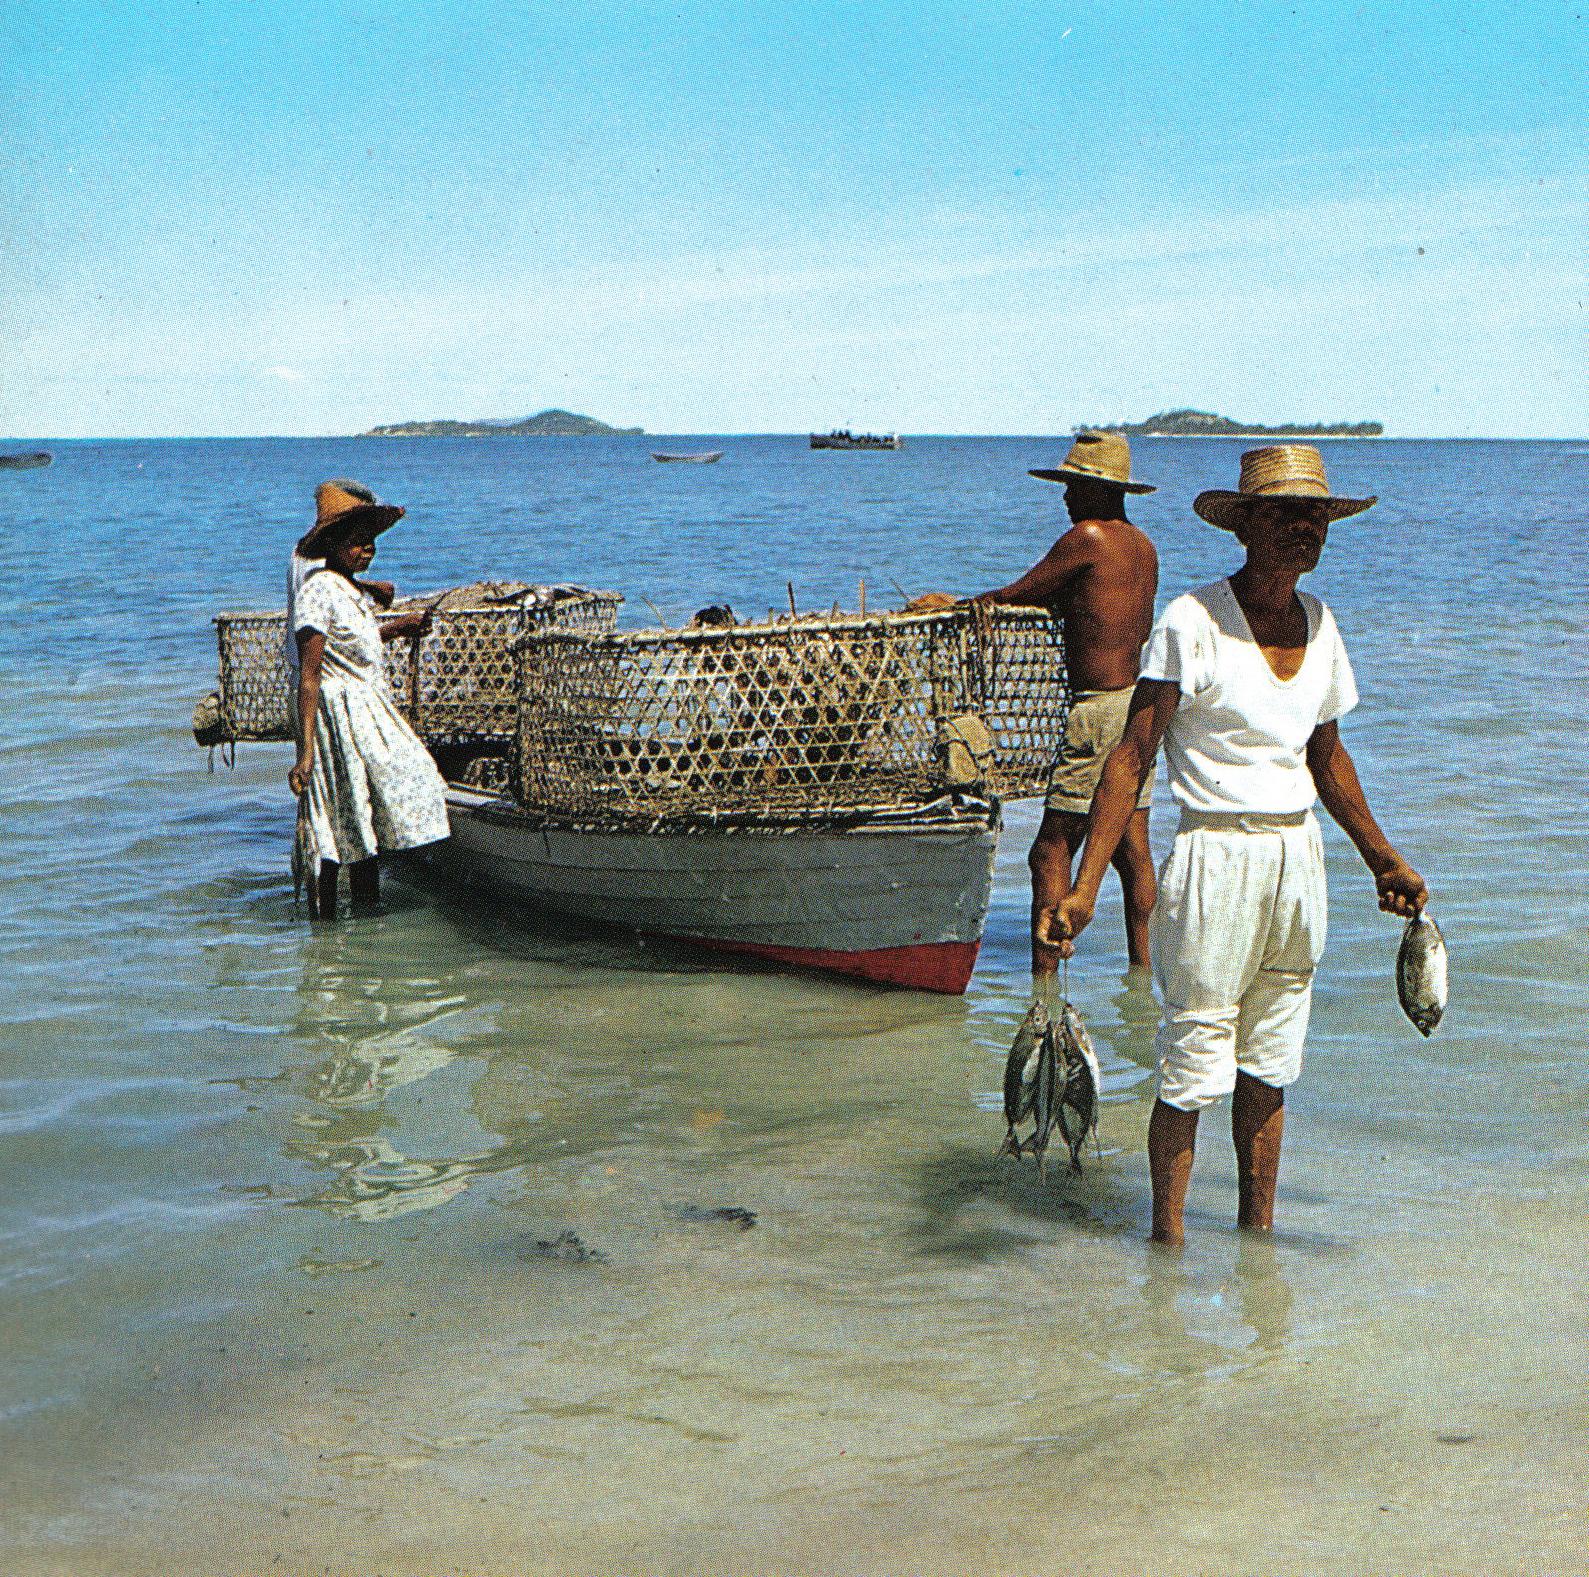 File:Fisherman Seychelles.jpg - Wikimedia Commons